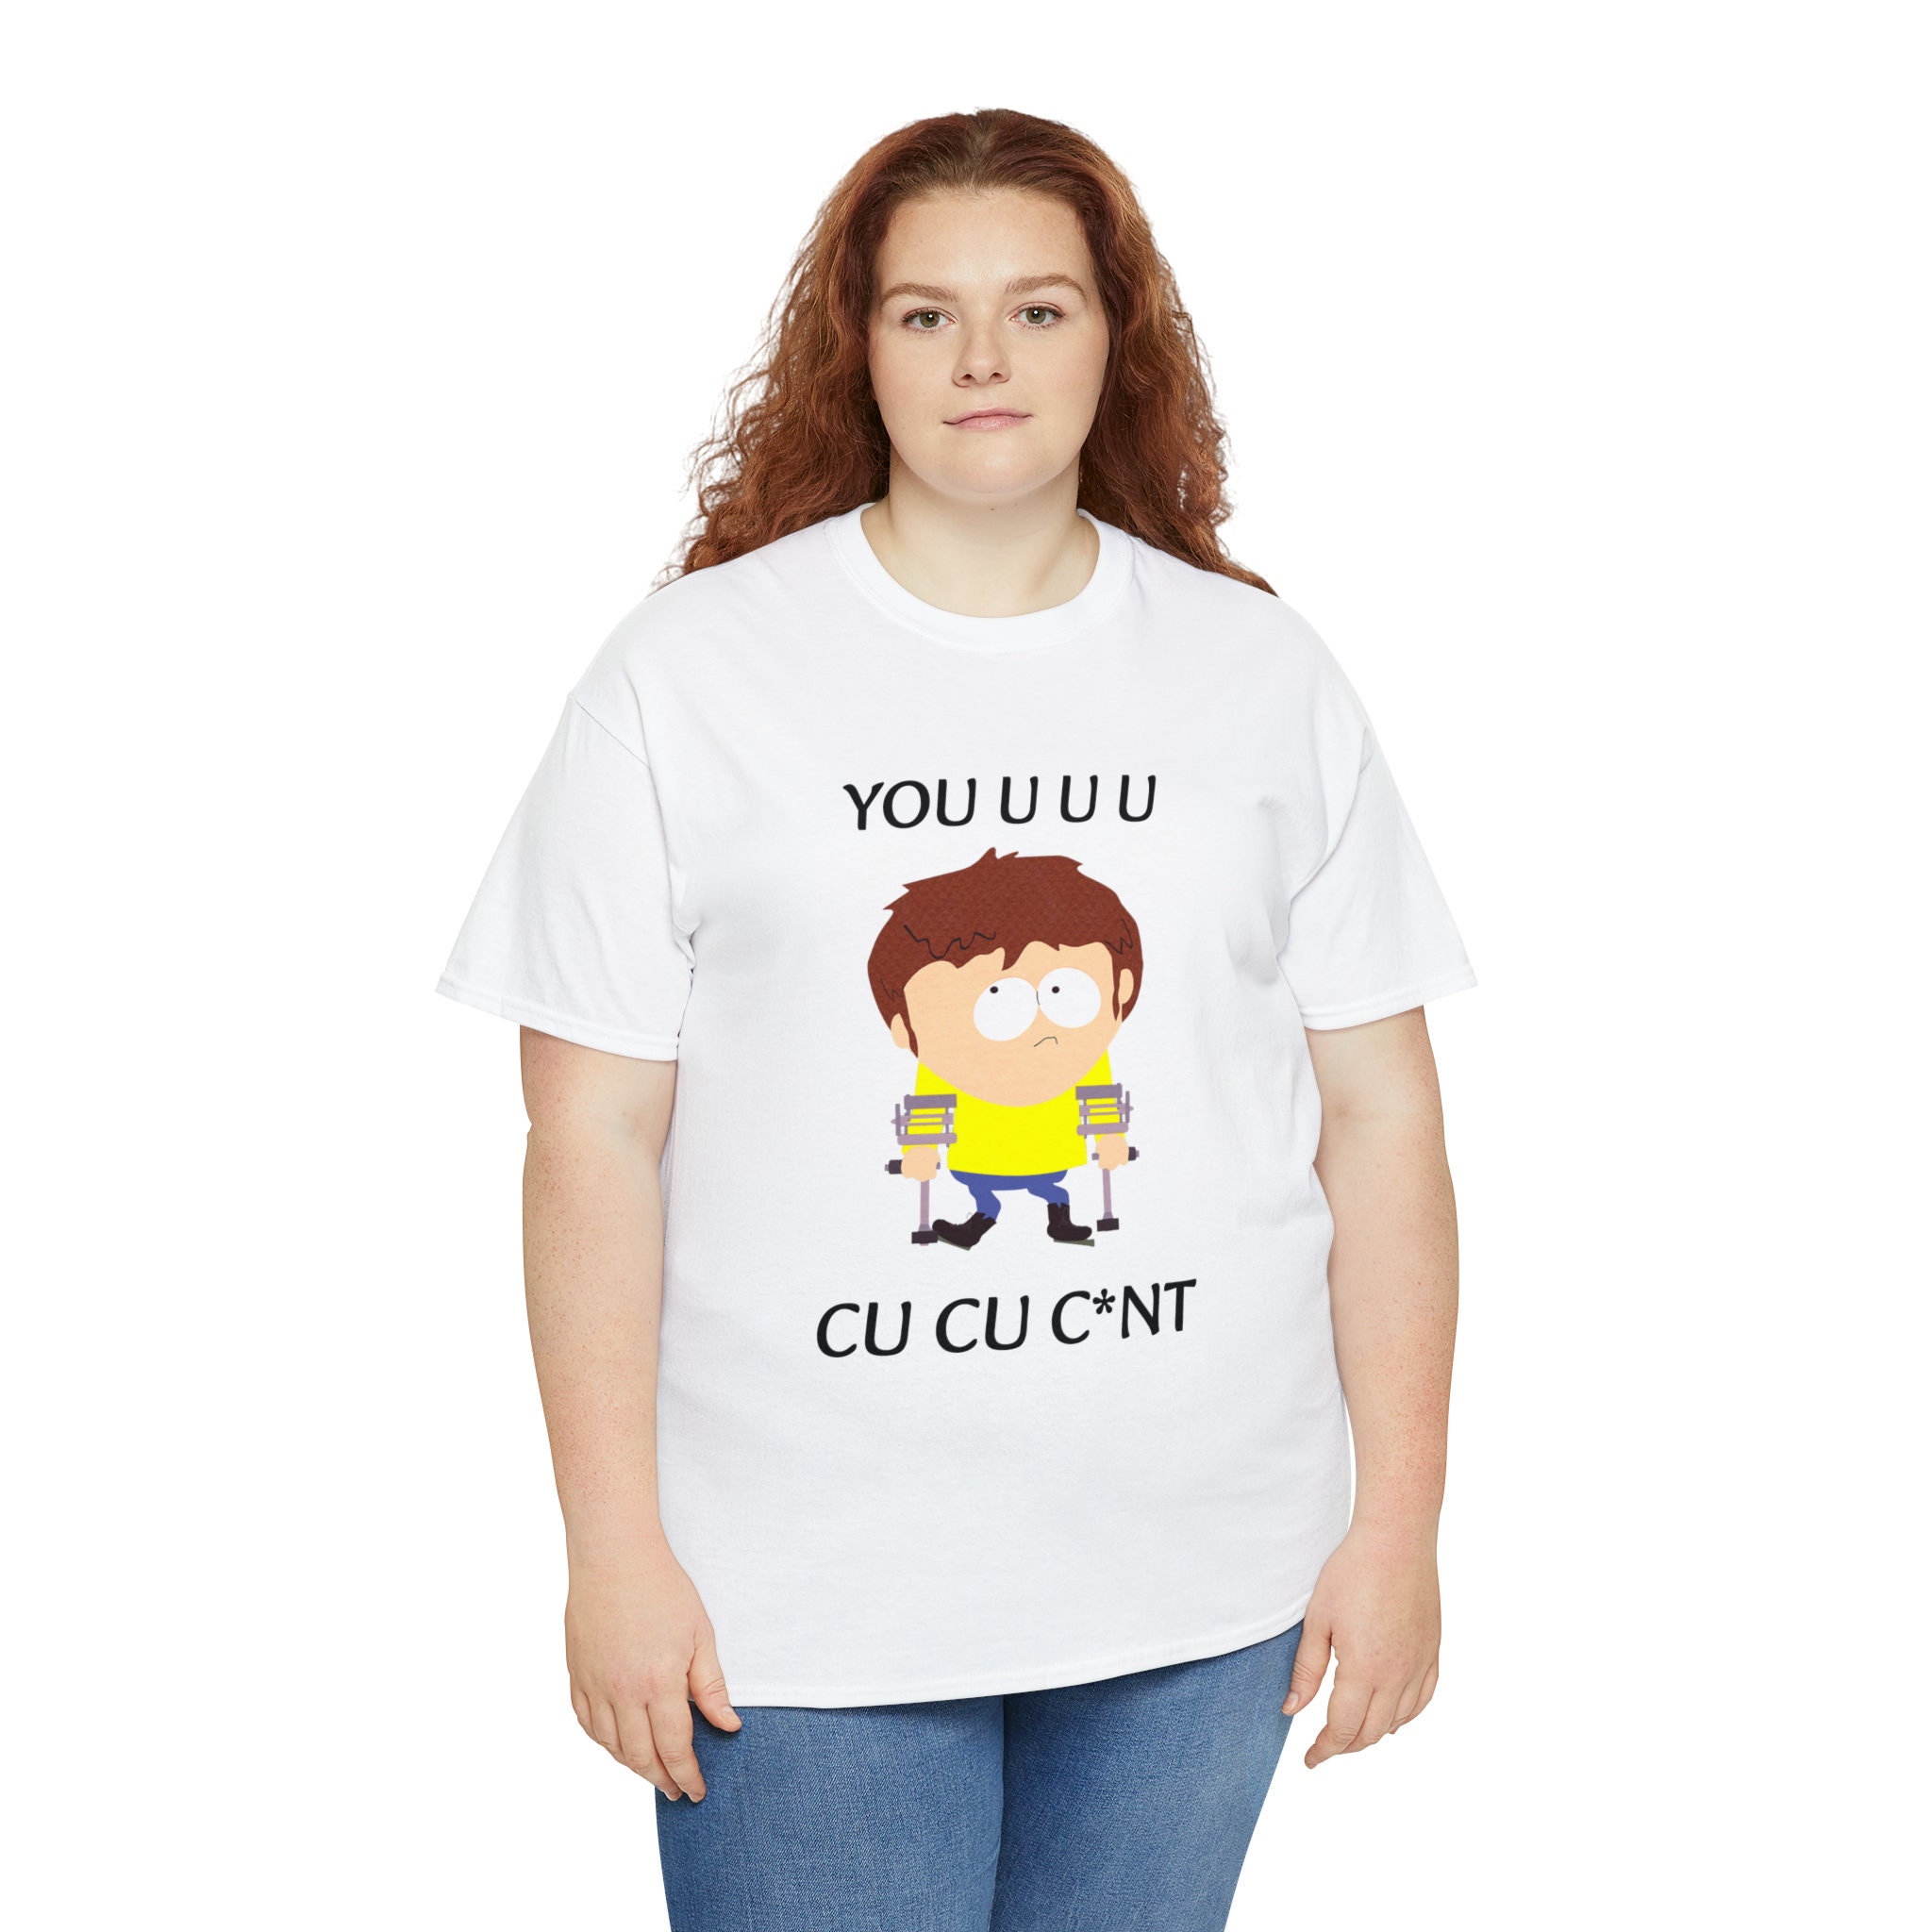 South Park Jimmy Valmer Tee You U U U Cu Cu Cunt Shirt Funny TV Show Tee  for Fans Unique Gift for Southpark Fans - Etsy